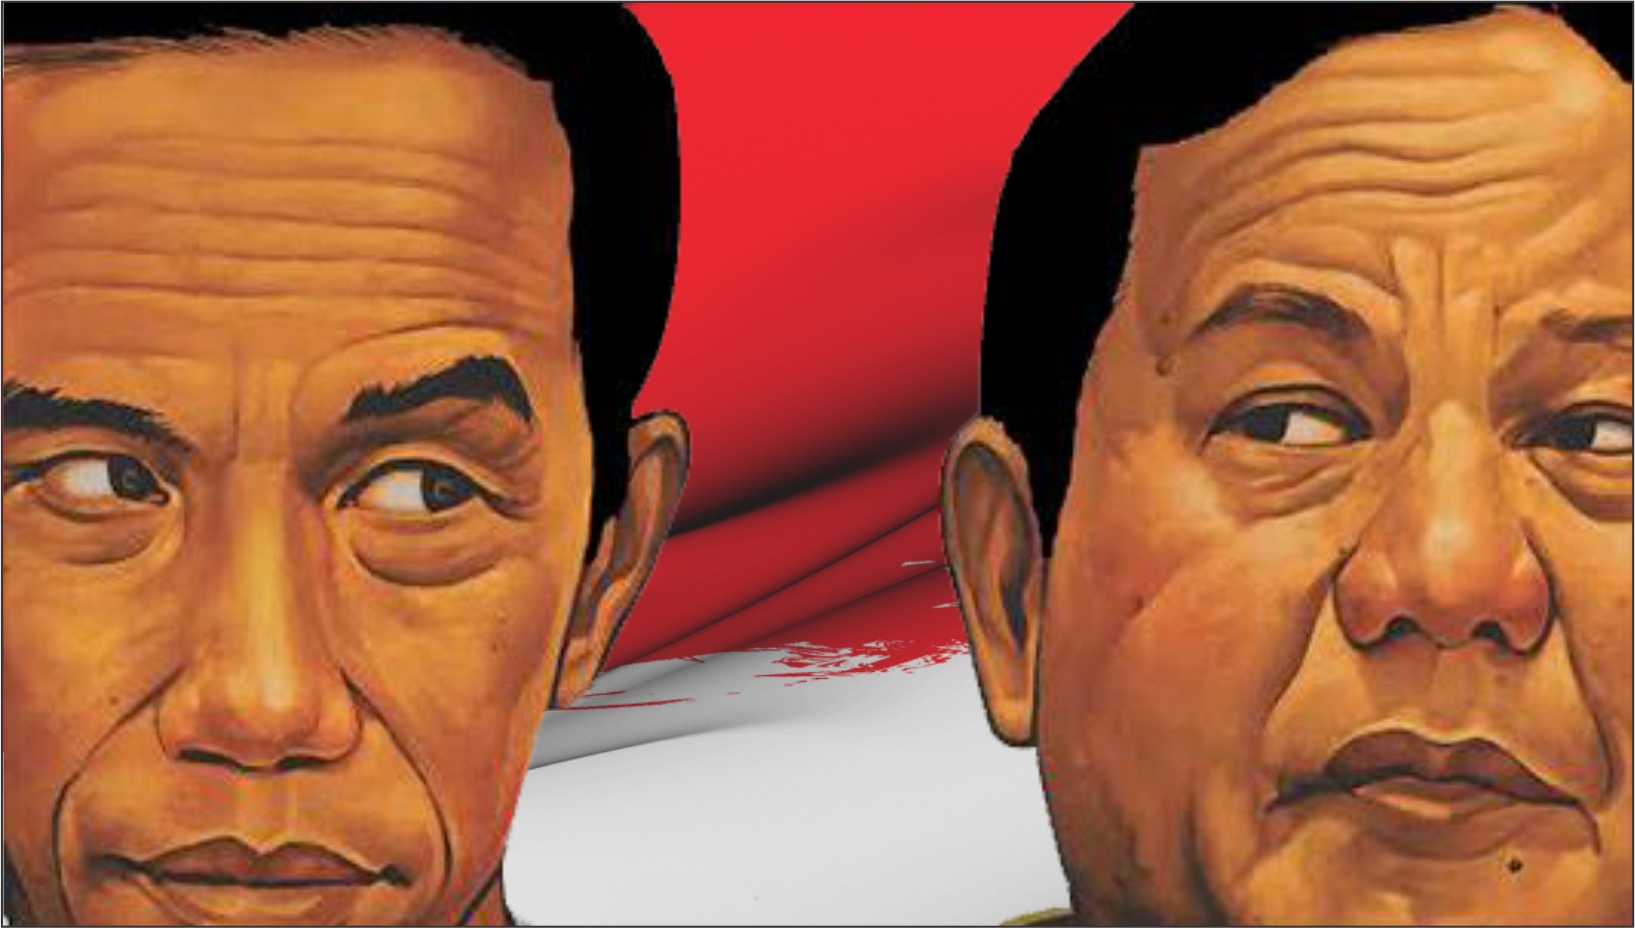 Polemik Data Debat Berujung Pelaporan, Jokowi Dinilai Reportif, Prabowo Alternatif